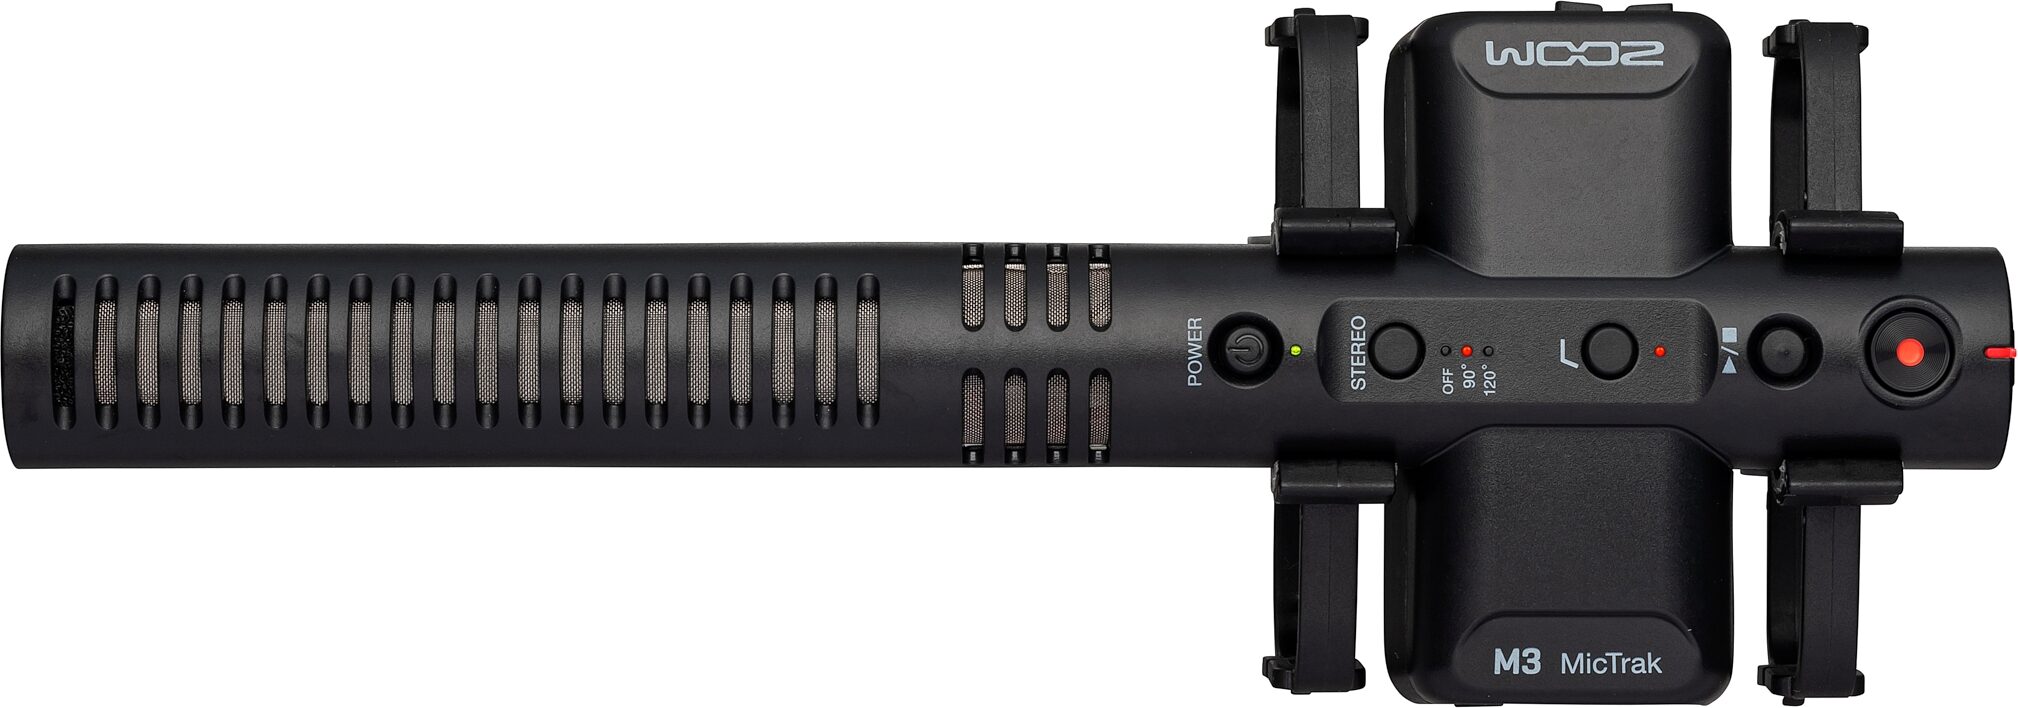 Zoom M3 MicTrak Stereo Shotgun Microphone/Recorder